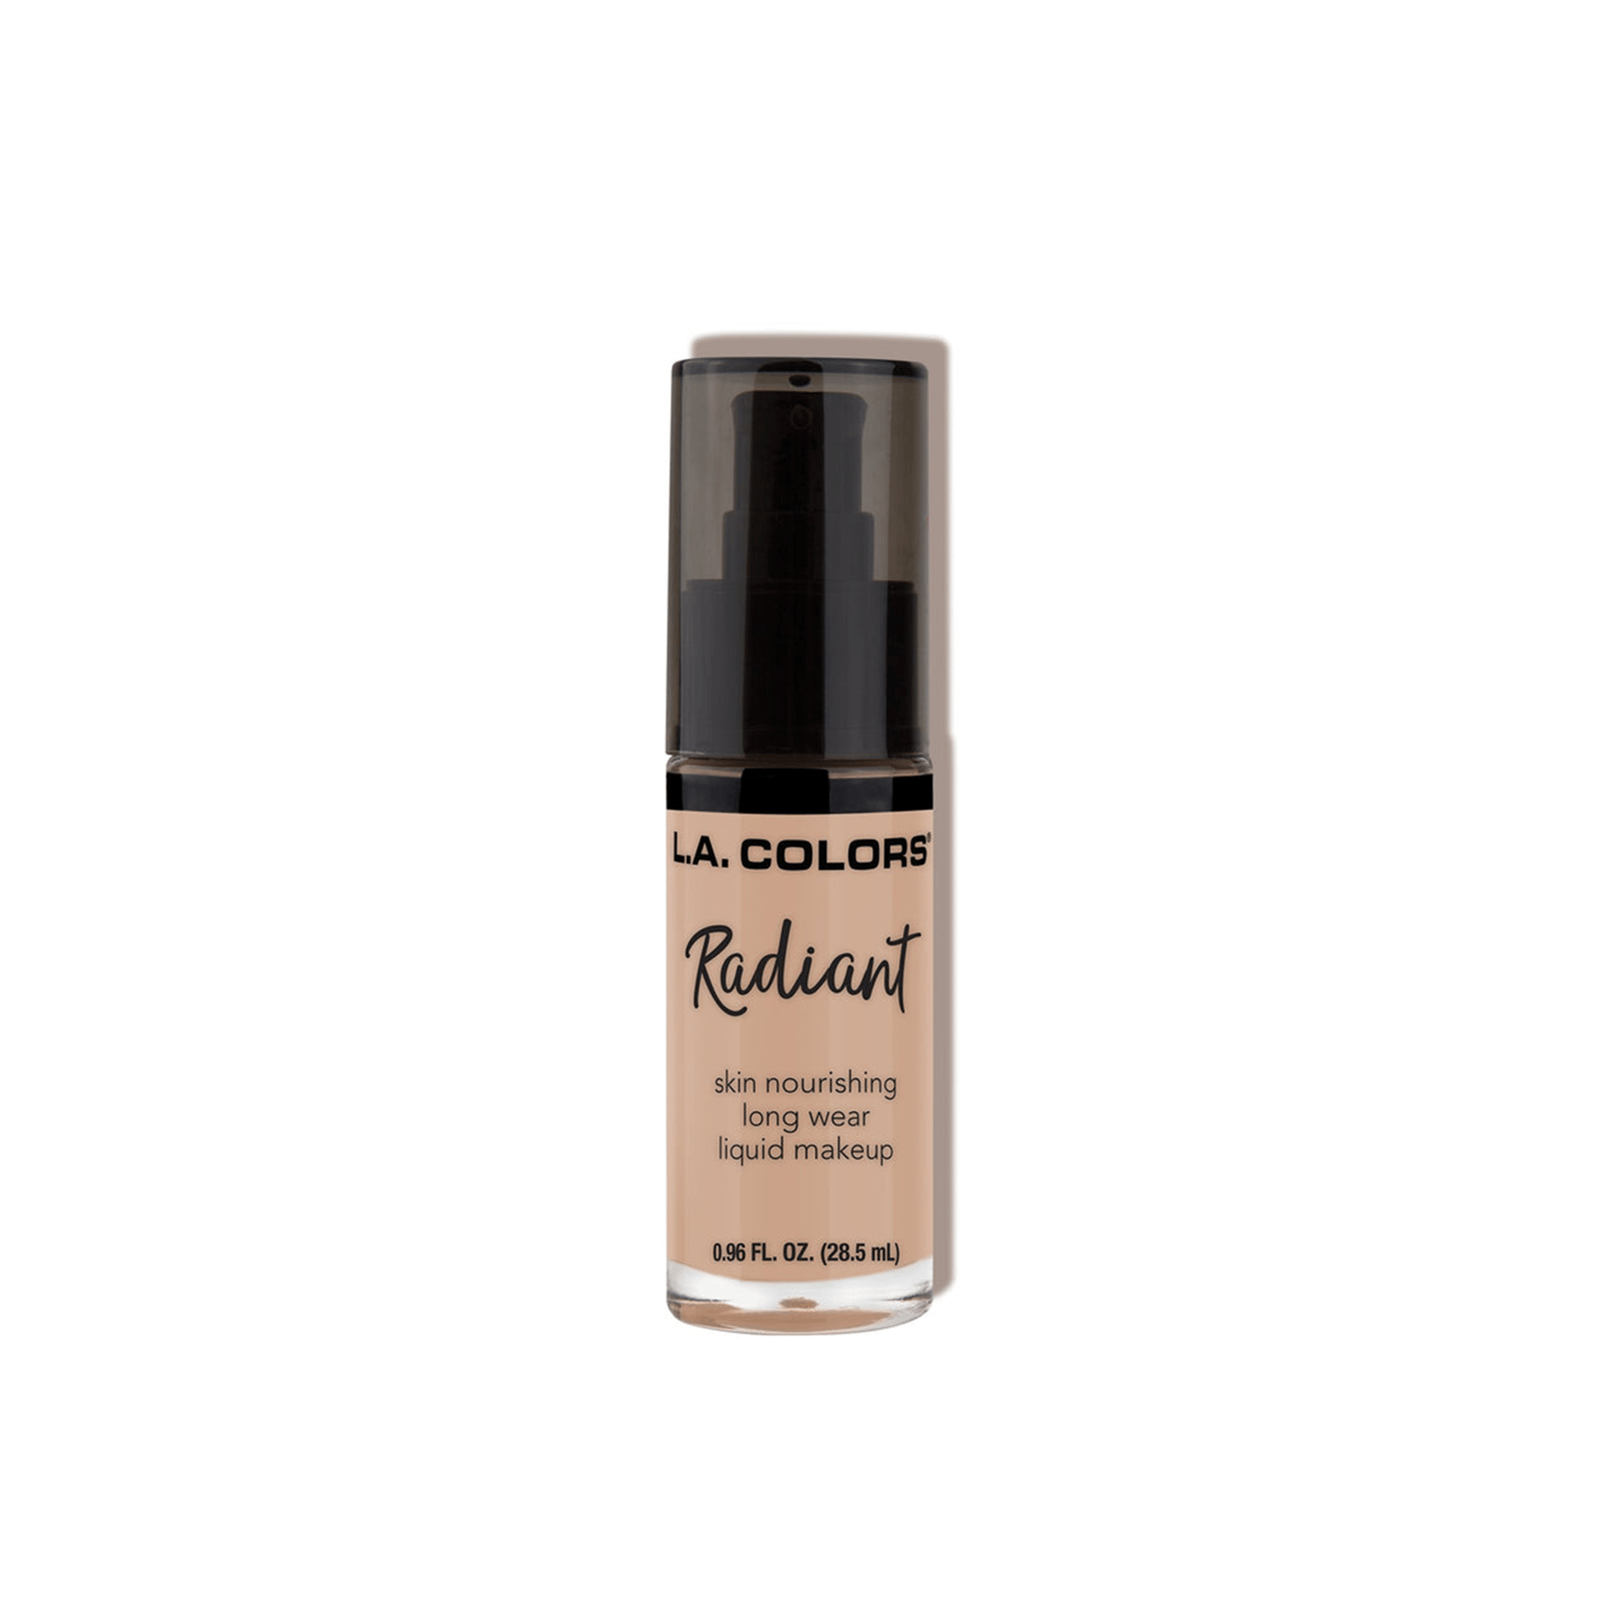 L.A. Colors Radiant Liquid Makeup Foundation CLM388 Beige 28.5ml (0.96 fl oz)